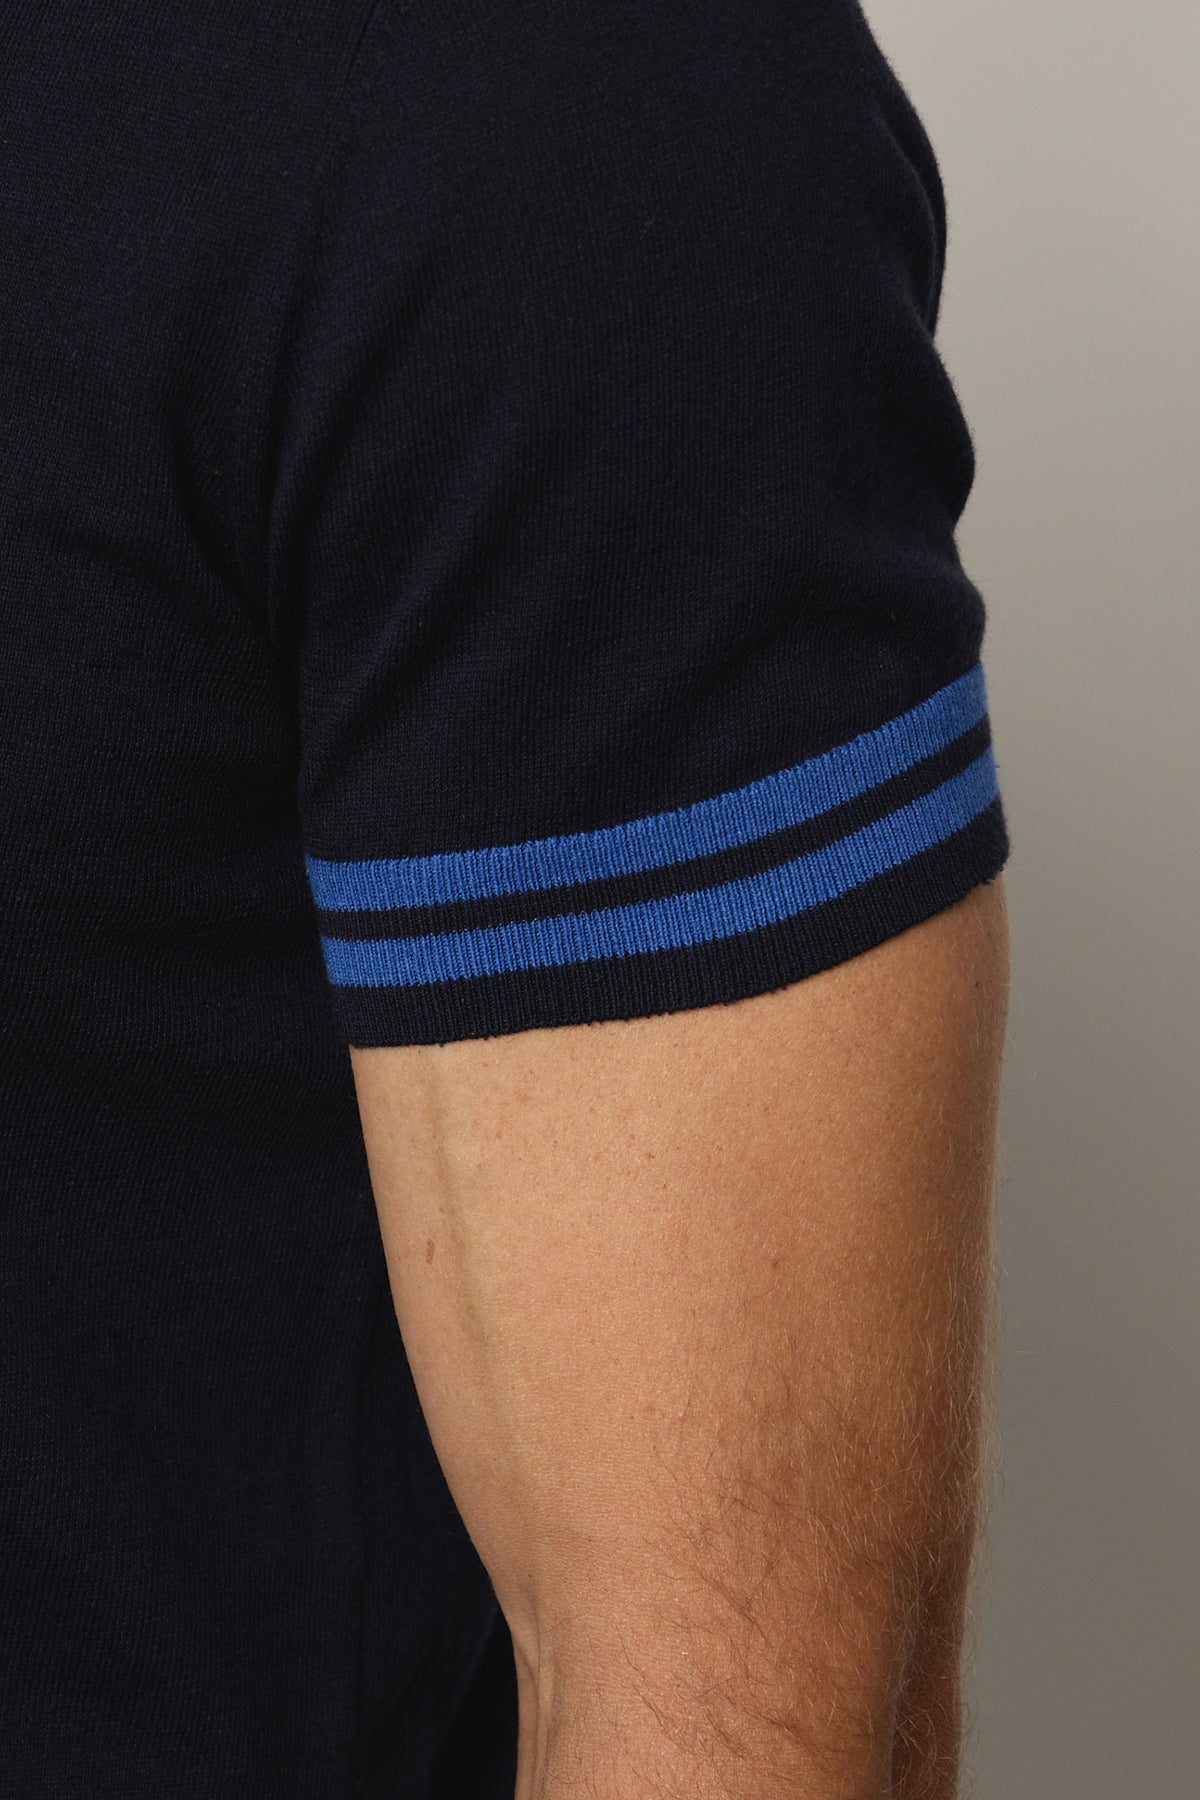 Hogan Polo in navy linen blend detail of double stripe on sleeve trim-26249295954113